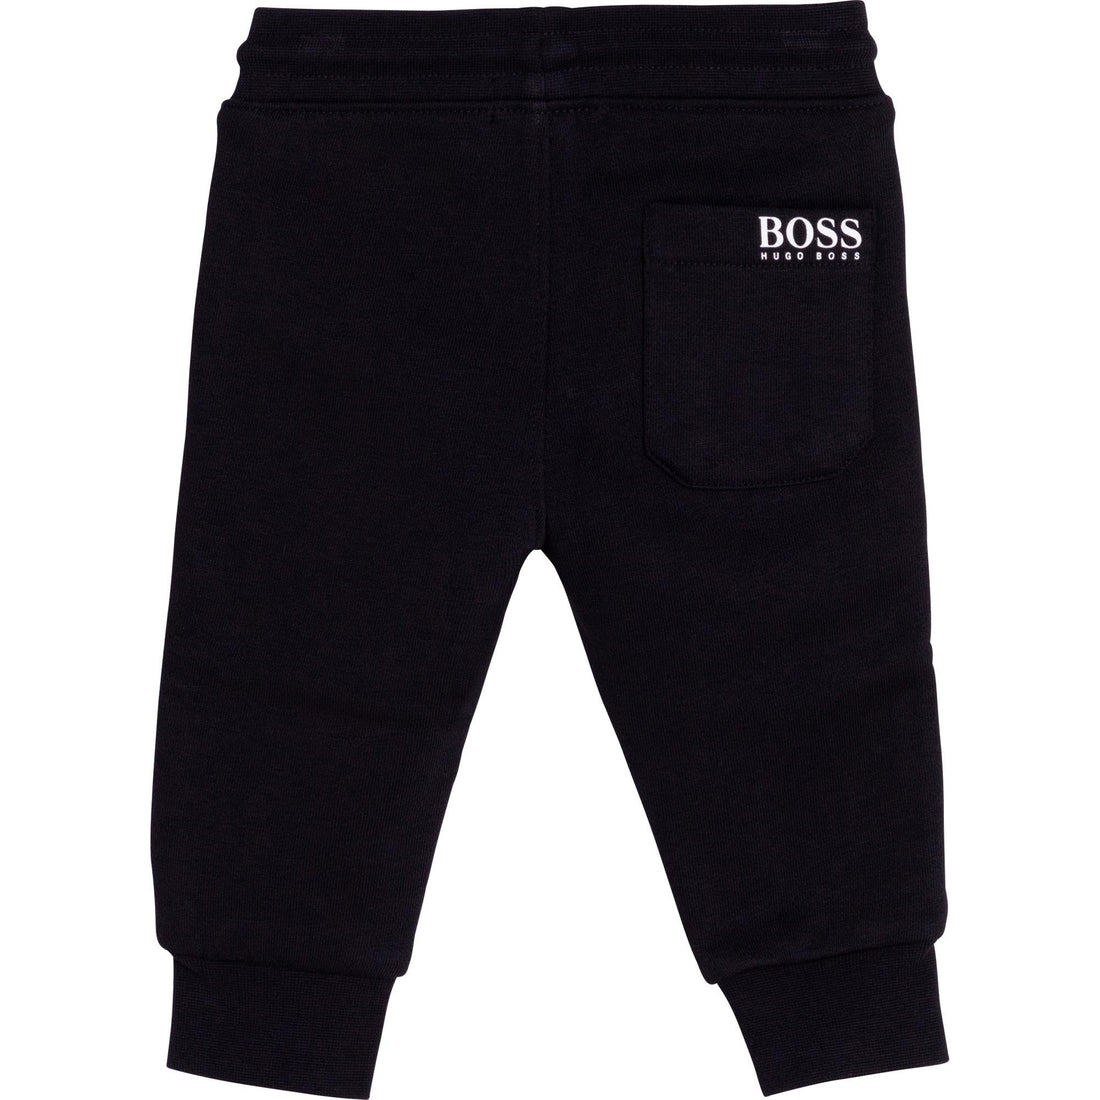 Boss Jogging Bottoms - J04411